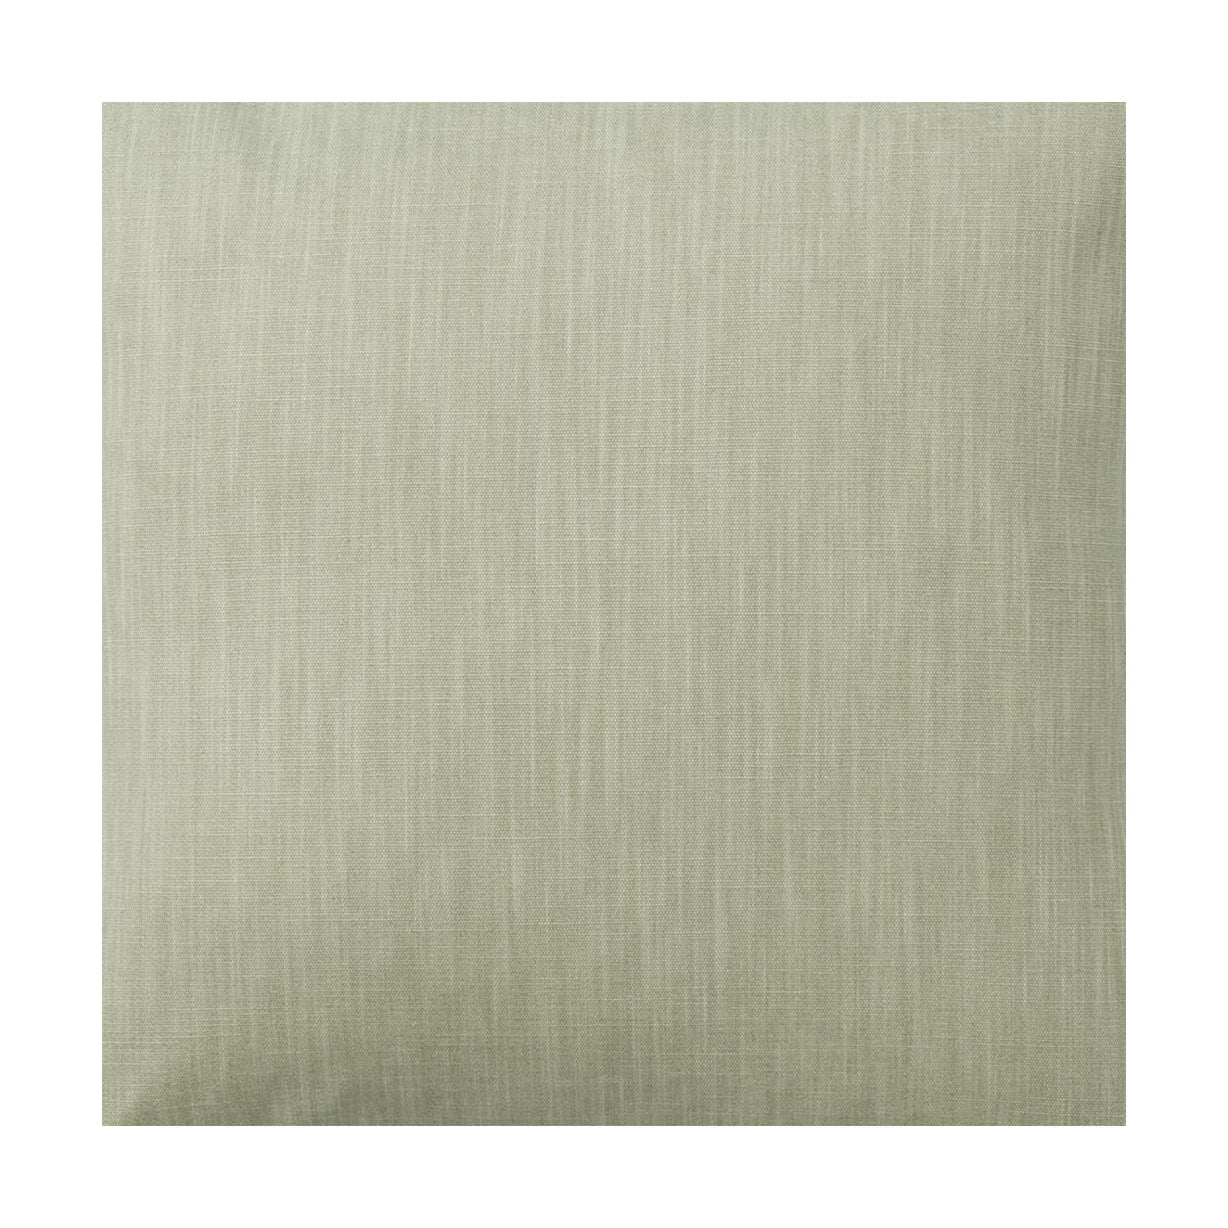 Spira Klotz šířka tkaniny 150 cm (cena za metr), Dusty Green